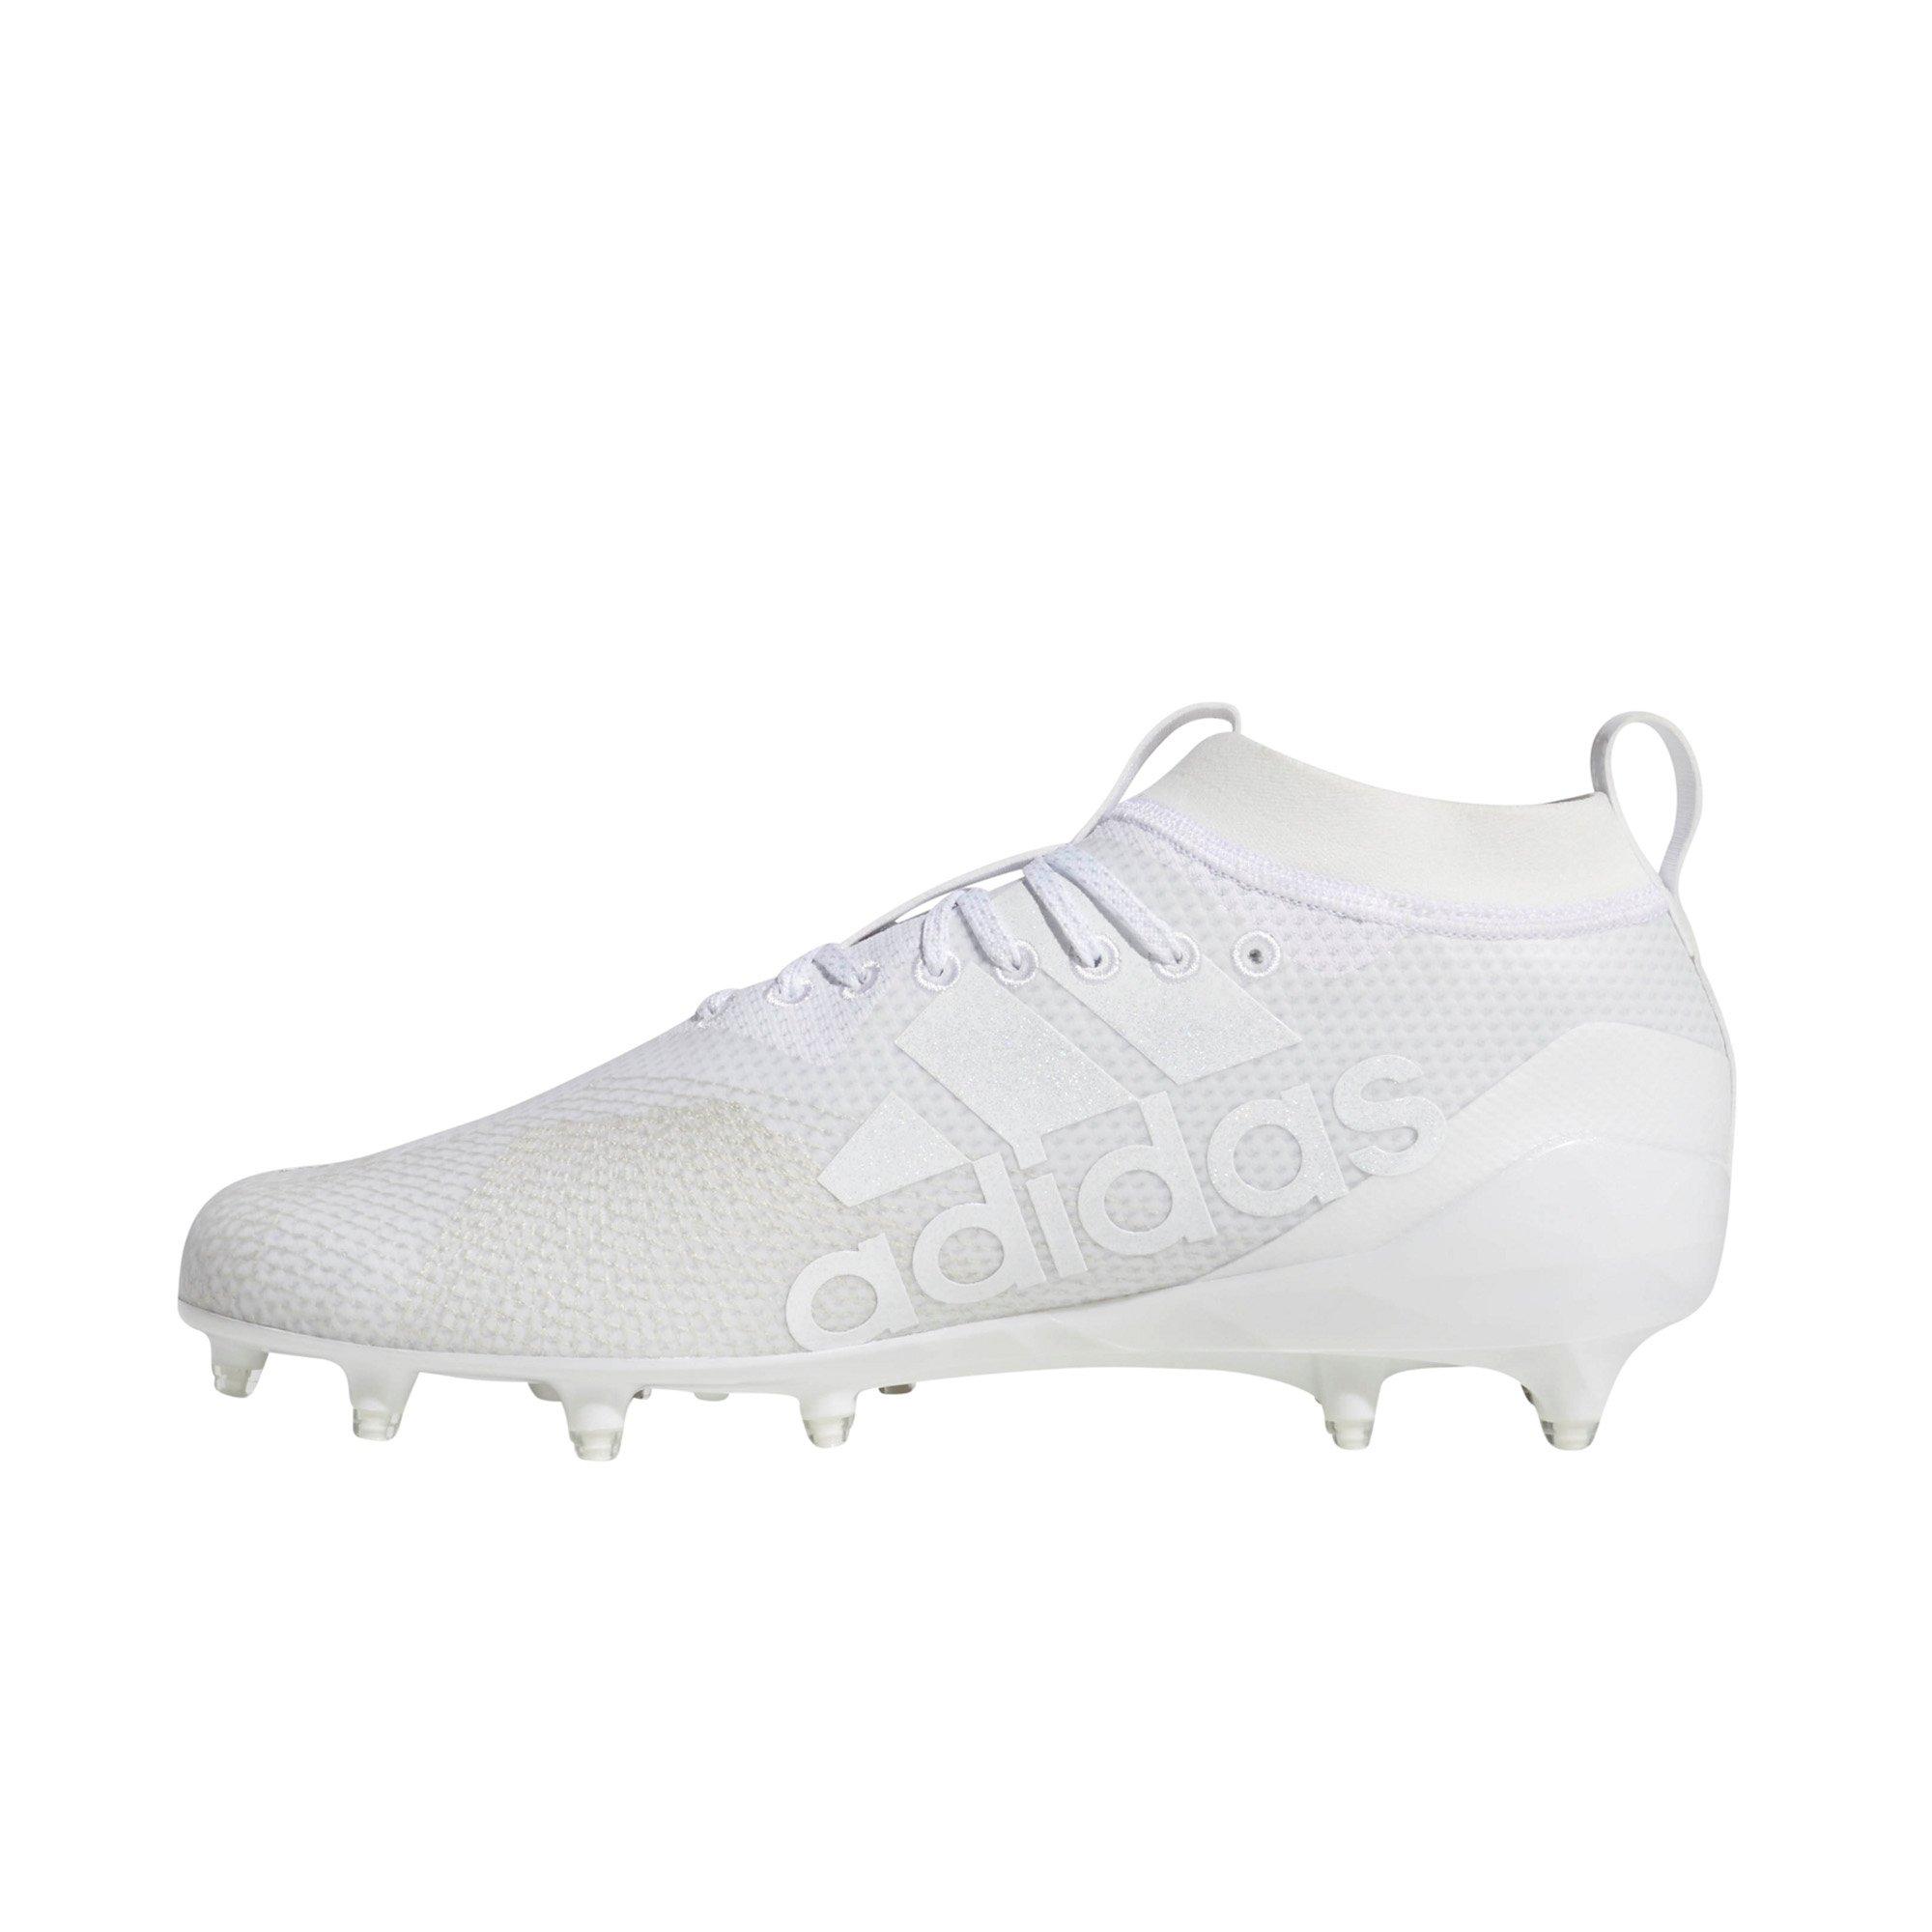 adidas soccer shoe